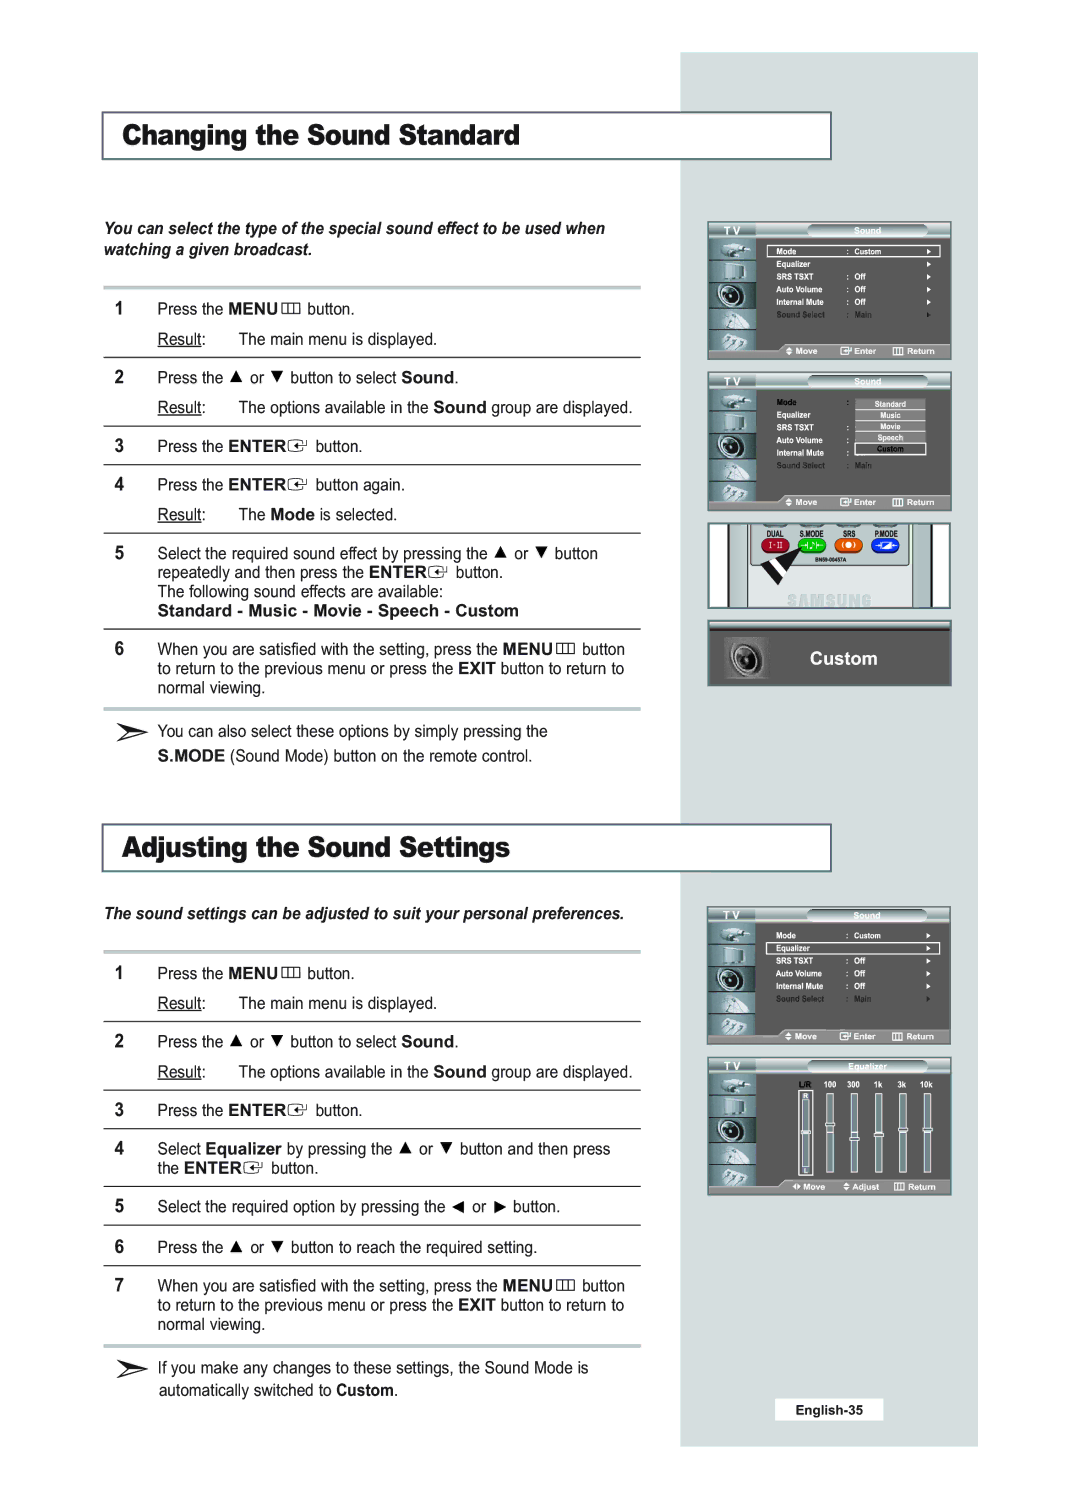 Samsung LE23R51B manual Changing the Sound Standard, Adjusting the Sound Settings, Standard Music Movie Speech Custom 